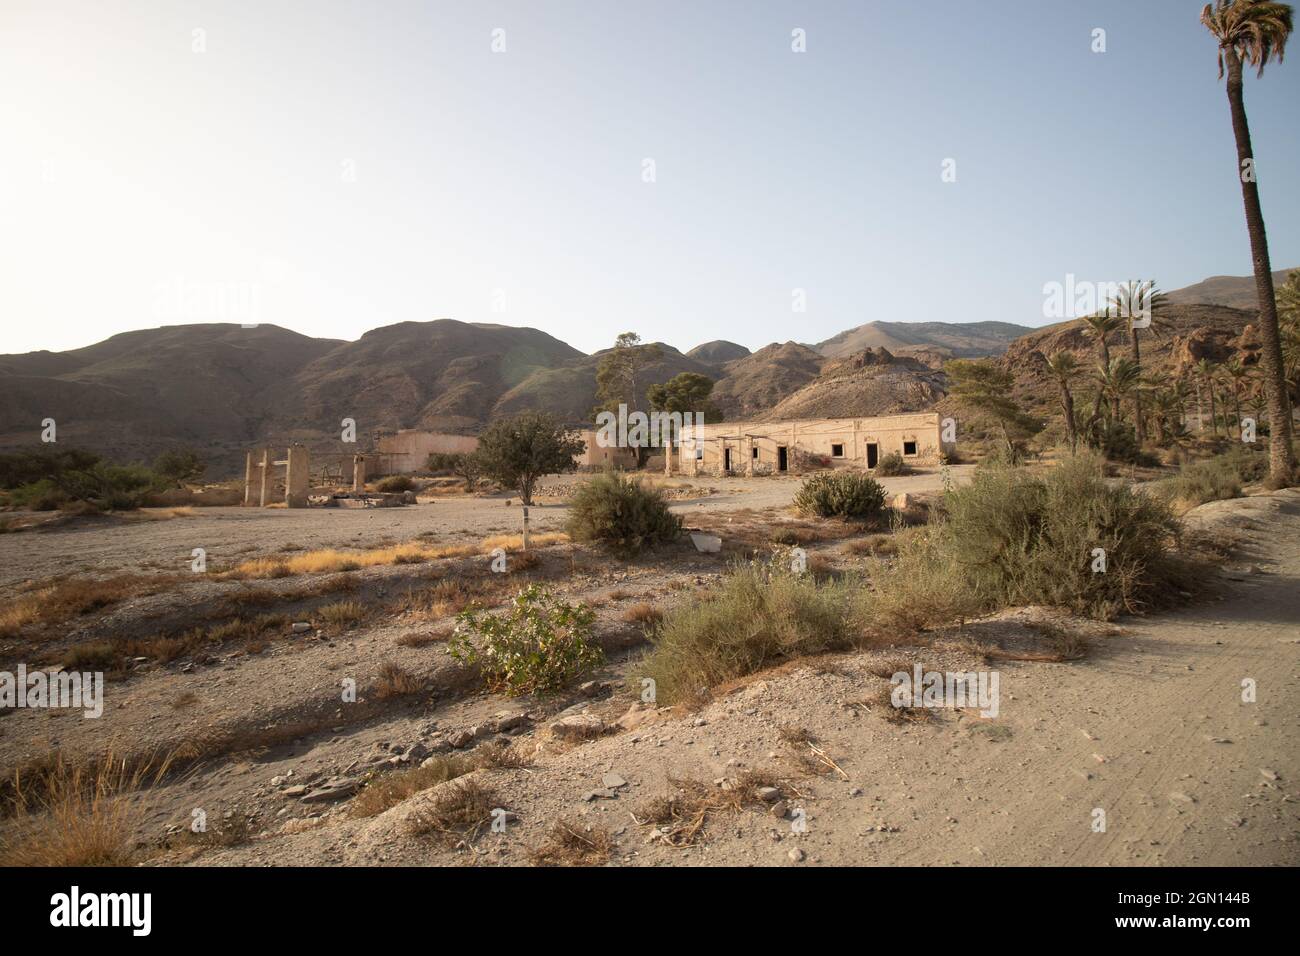 Shot of Paraje de El Chorrillo, a deserted sand area in Almeria, Spain Stock Photo